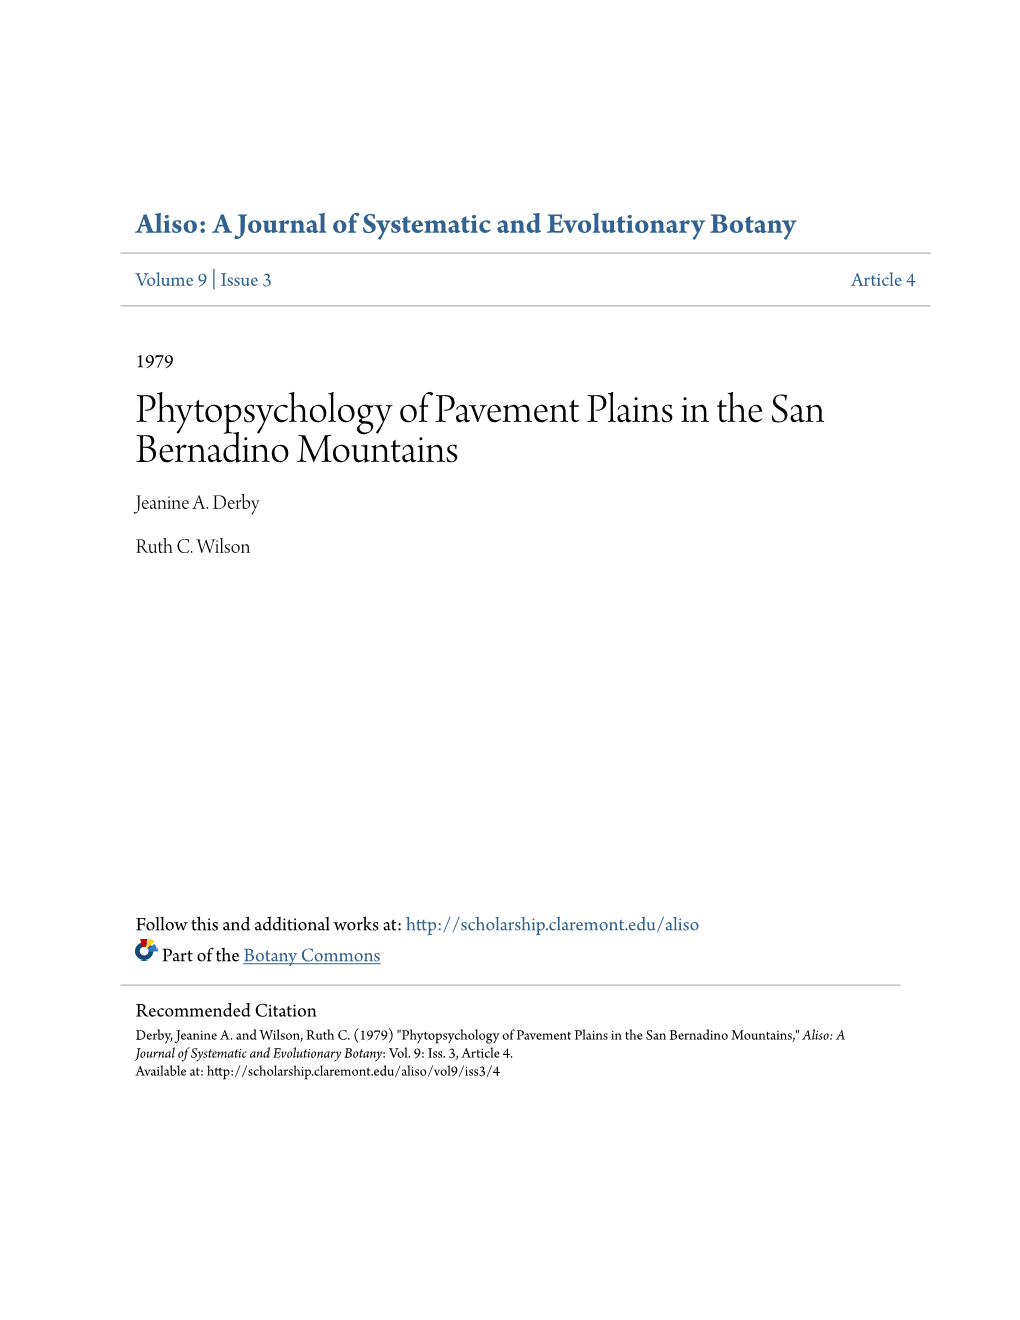 Phytopsychology of Pavement Plains in the San Bernadino Mountains Jeanine A